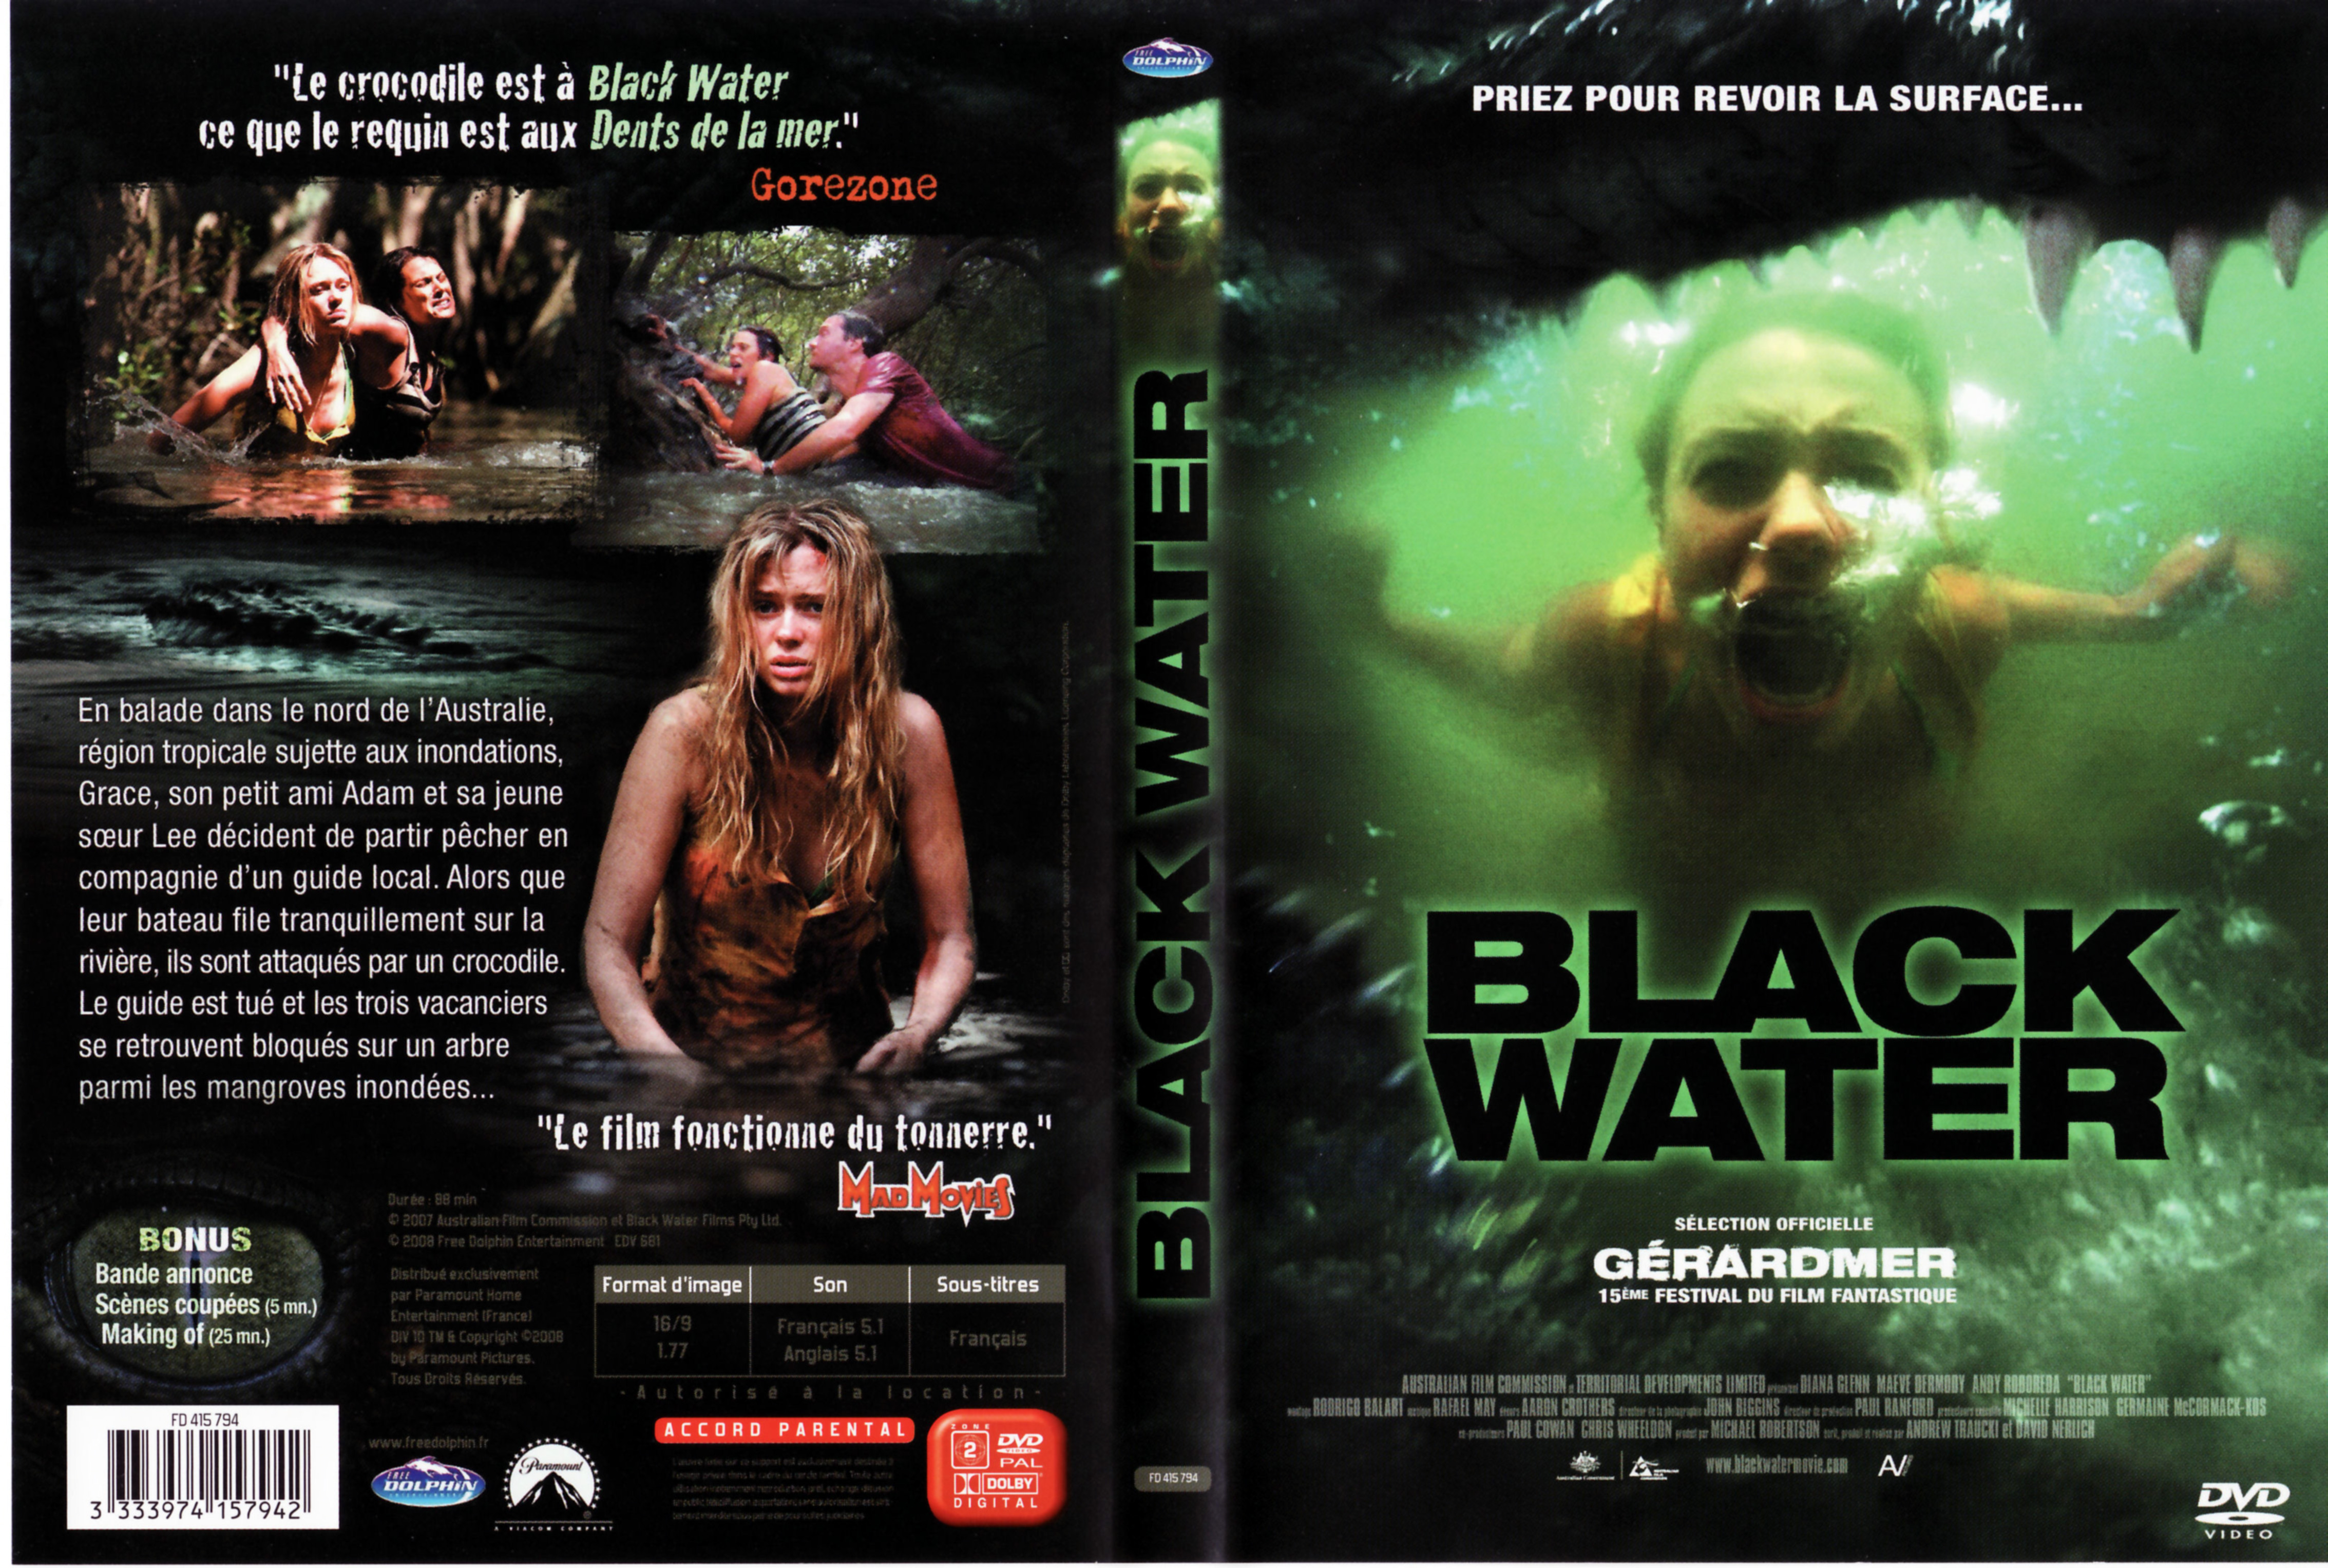 Jaquette DVD Black water